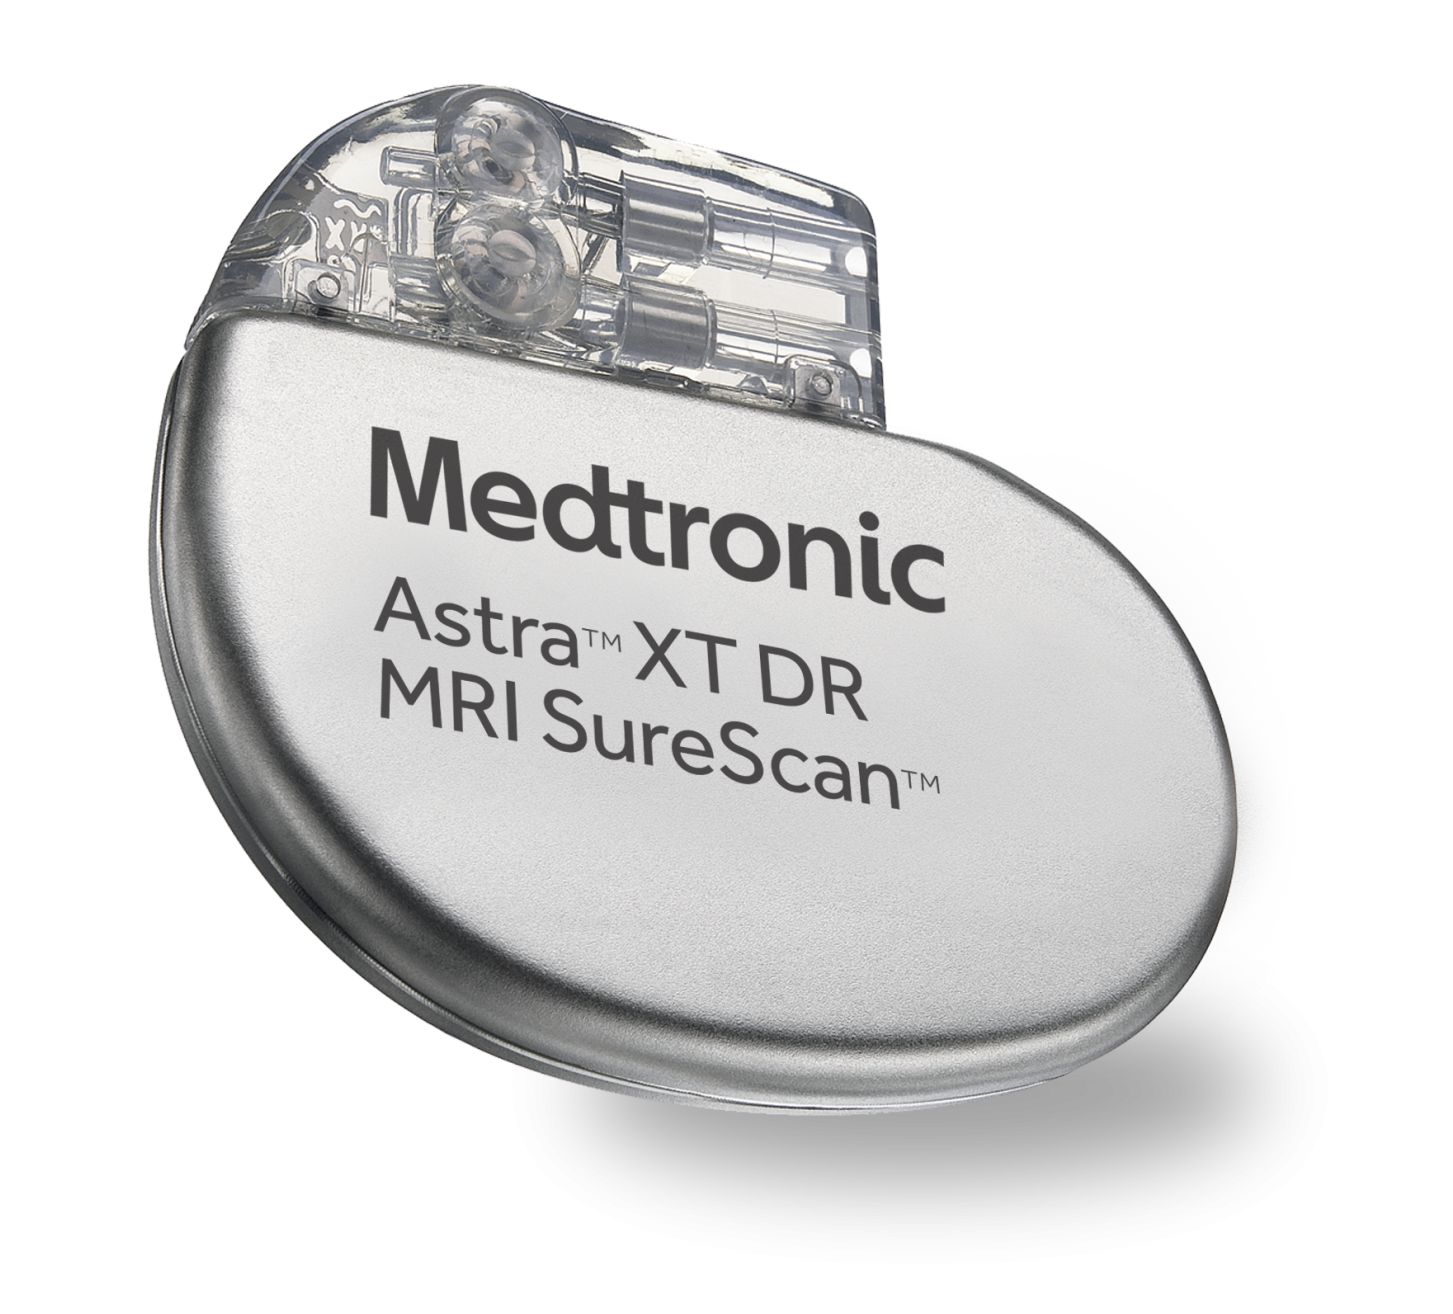 Astra XT MRI с технологией SureScan